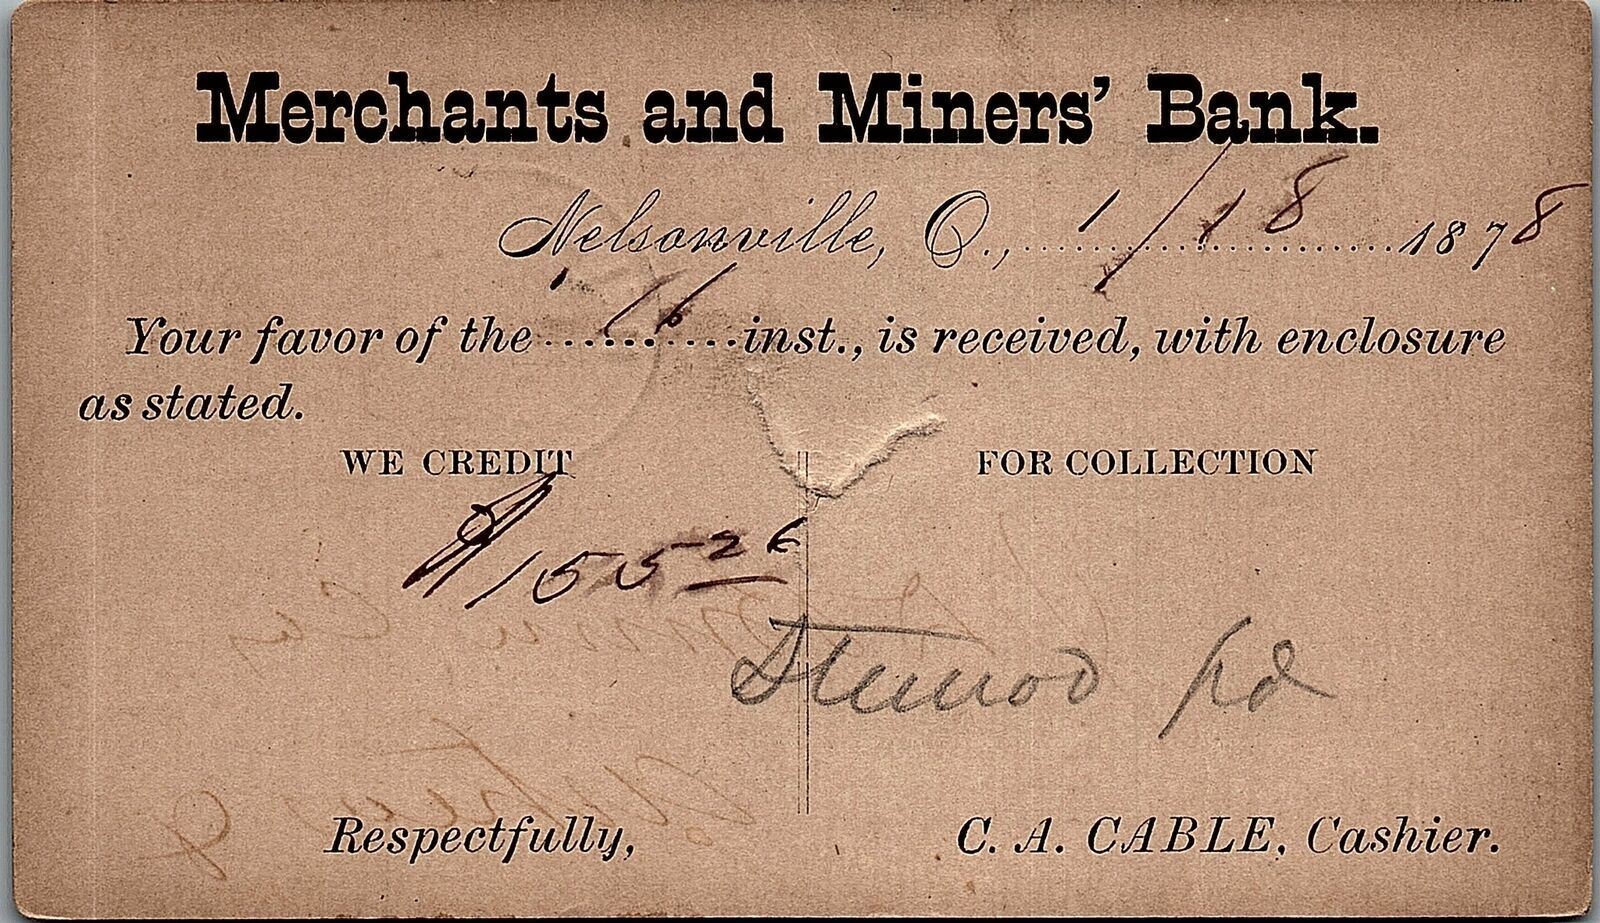 1878 NELSONVILLE OHIO MERCHANTS & MINERS BANK STATEMENT CARD POSTCARD 36-207